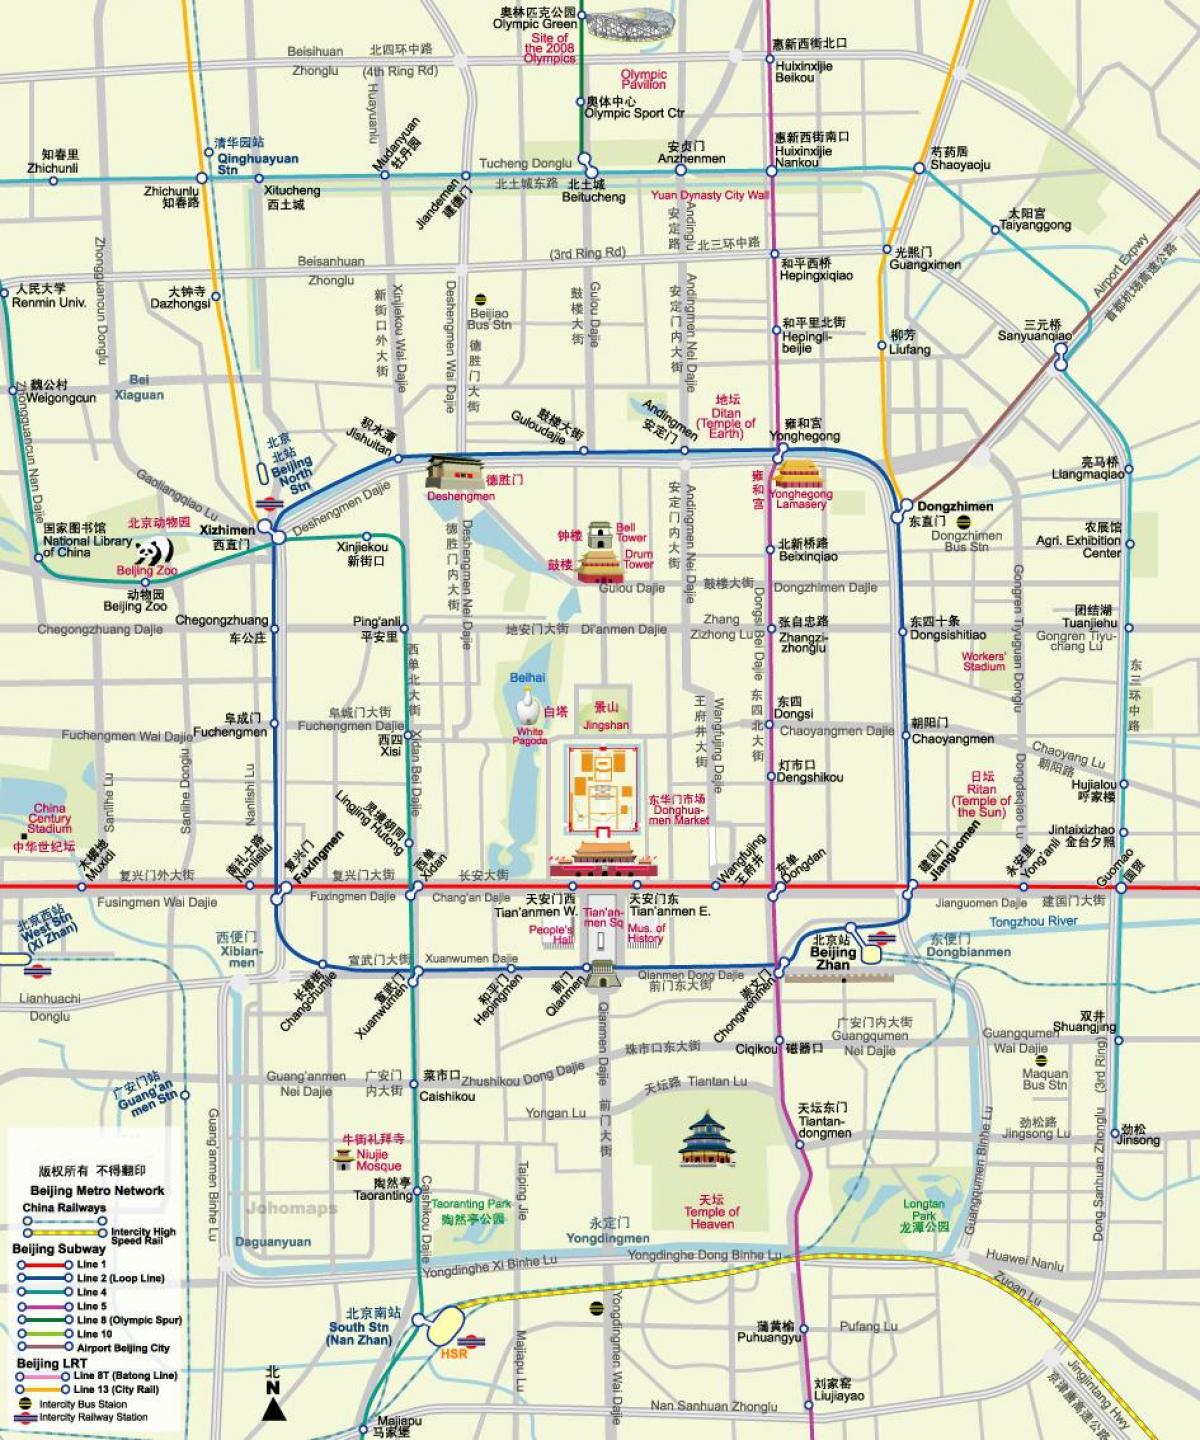 mapa del metro de Beijing mapa amb atractius turístics